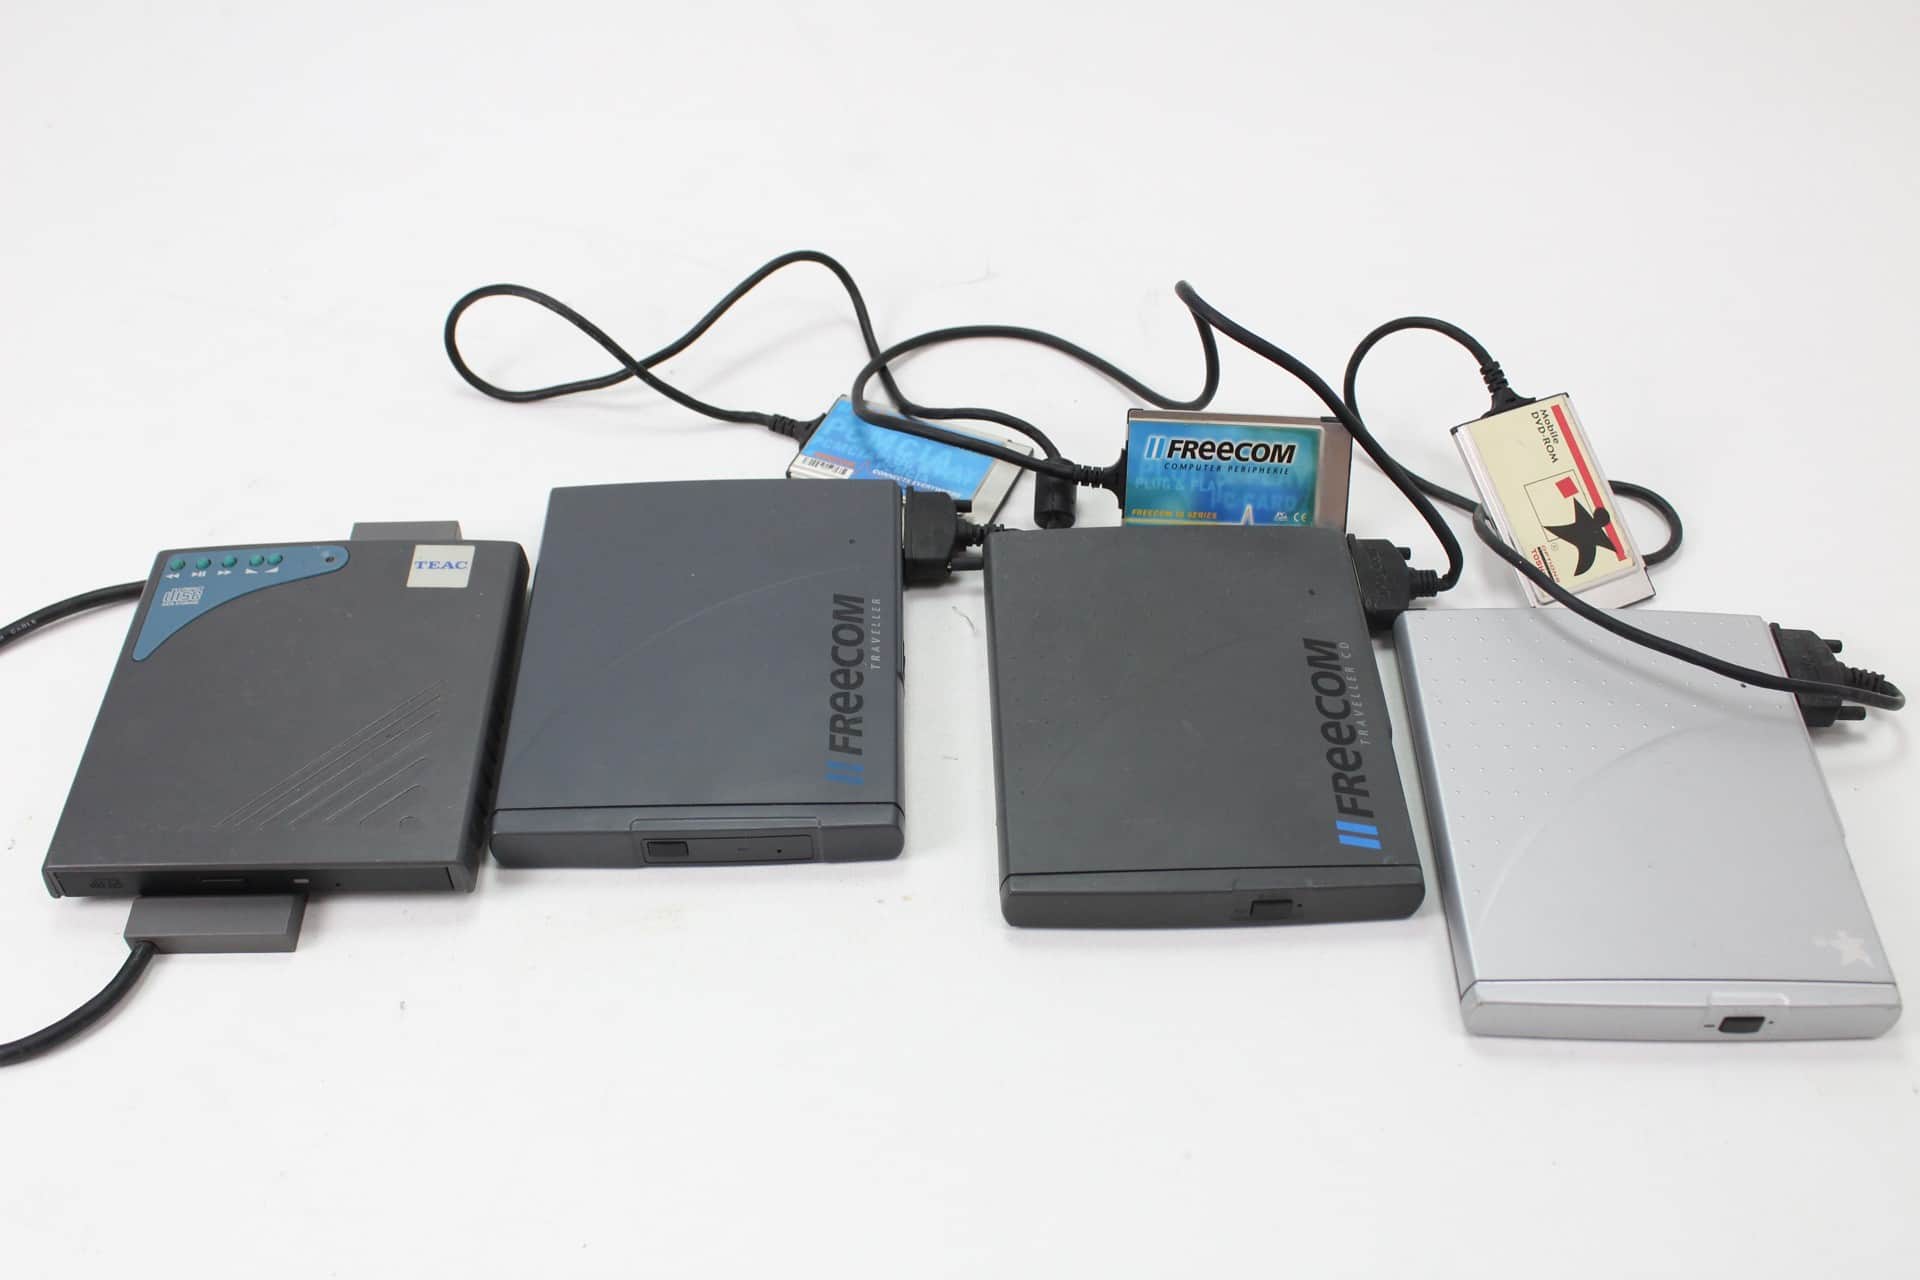 PCMCIA CD-ROM / FreeCom/Teac/Toshiba DVD